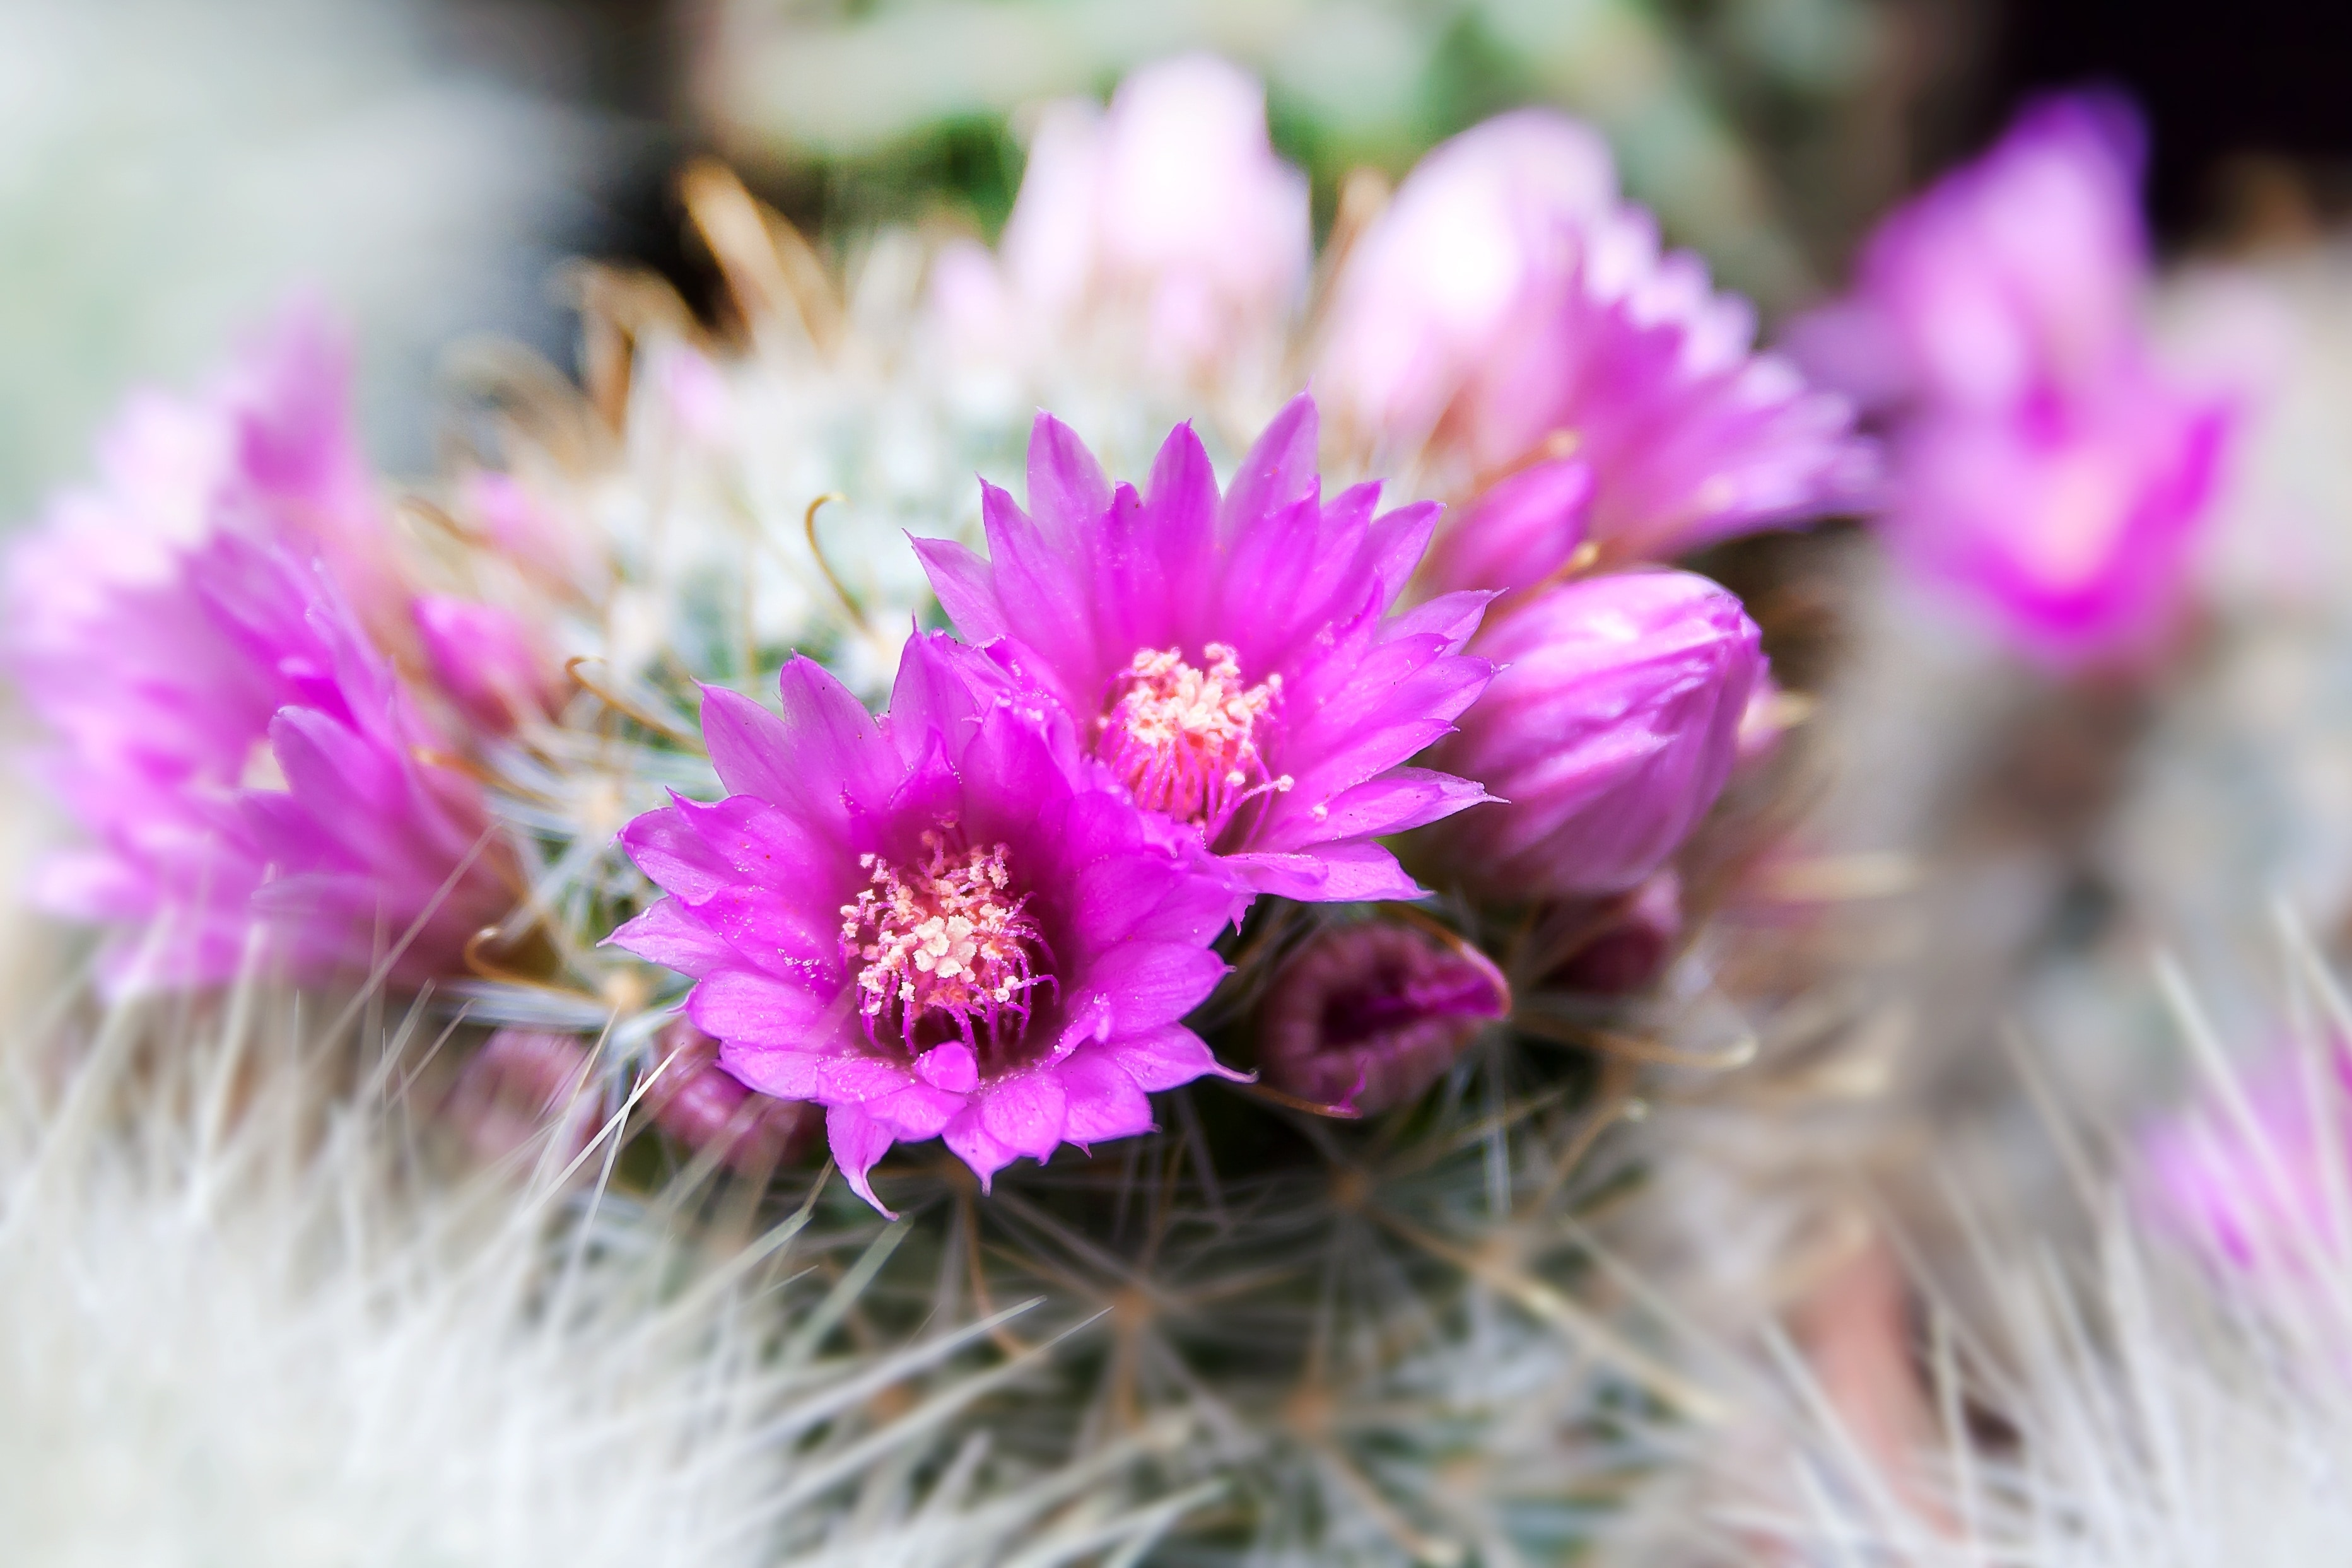 pink cactus flowers